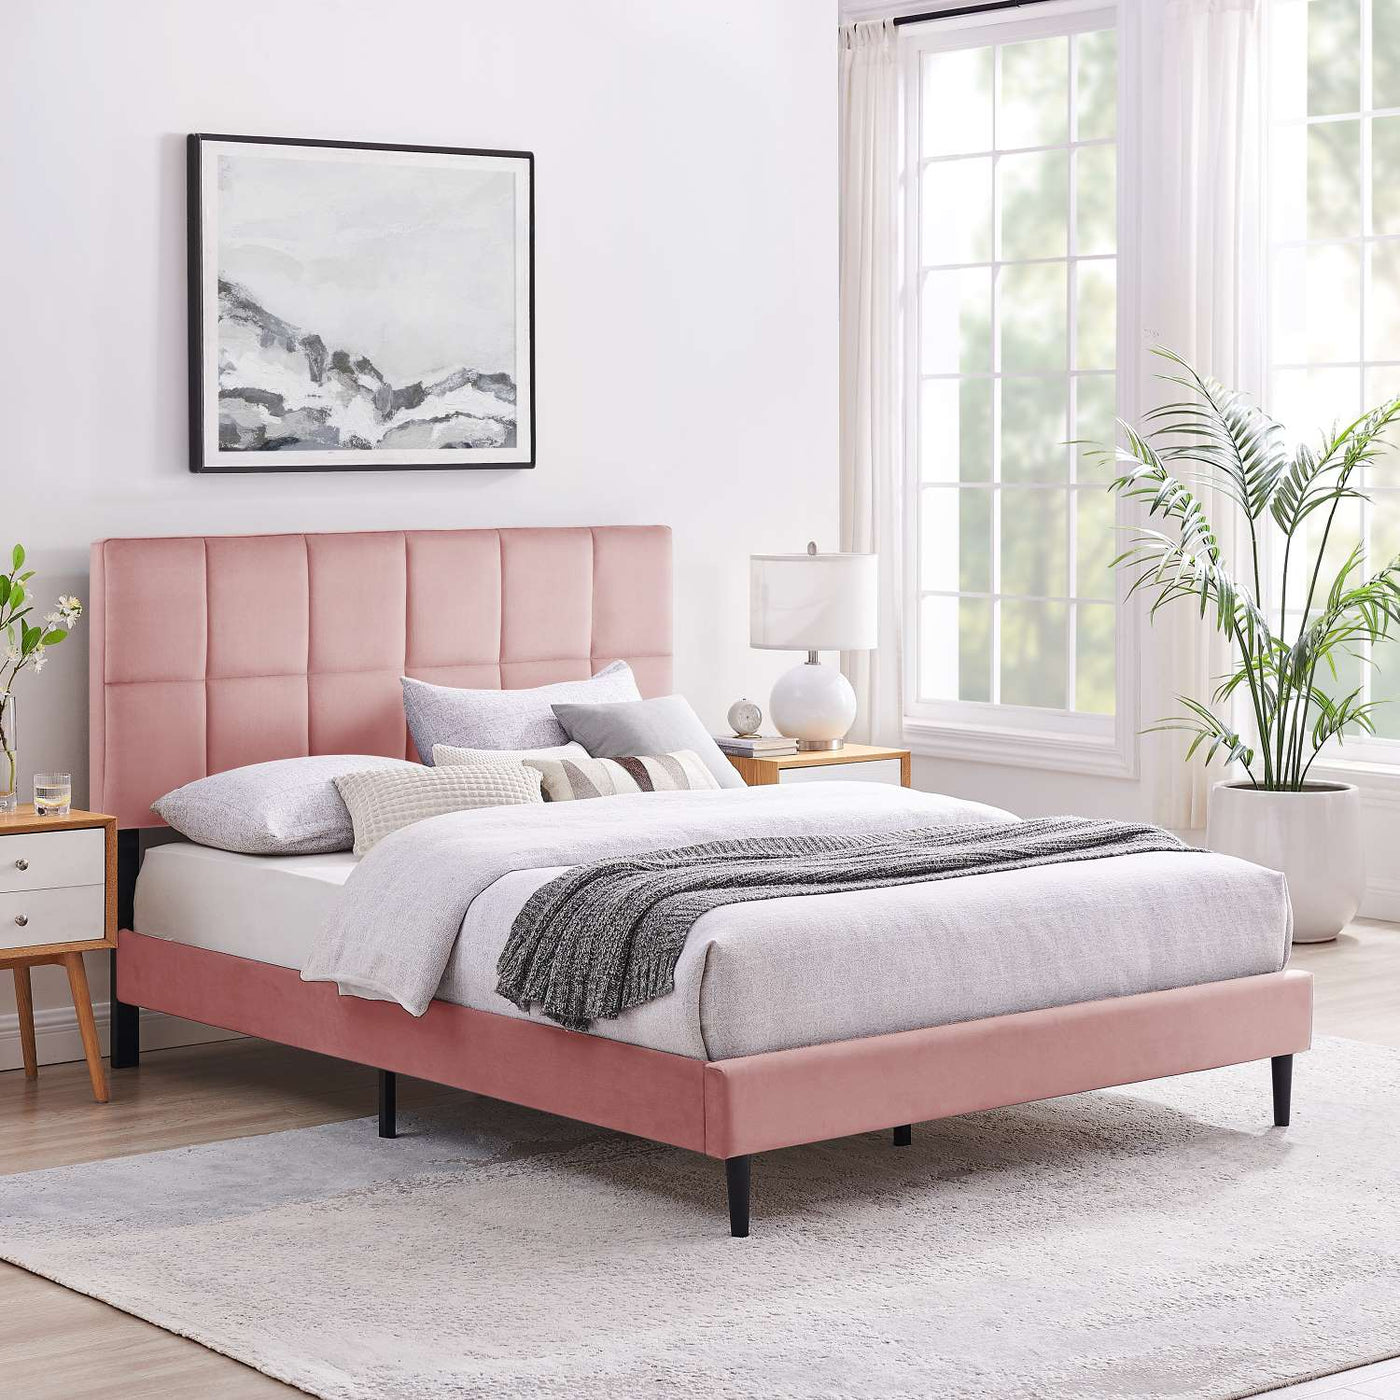 Sasha 3-Piece Full Bed - Pink